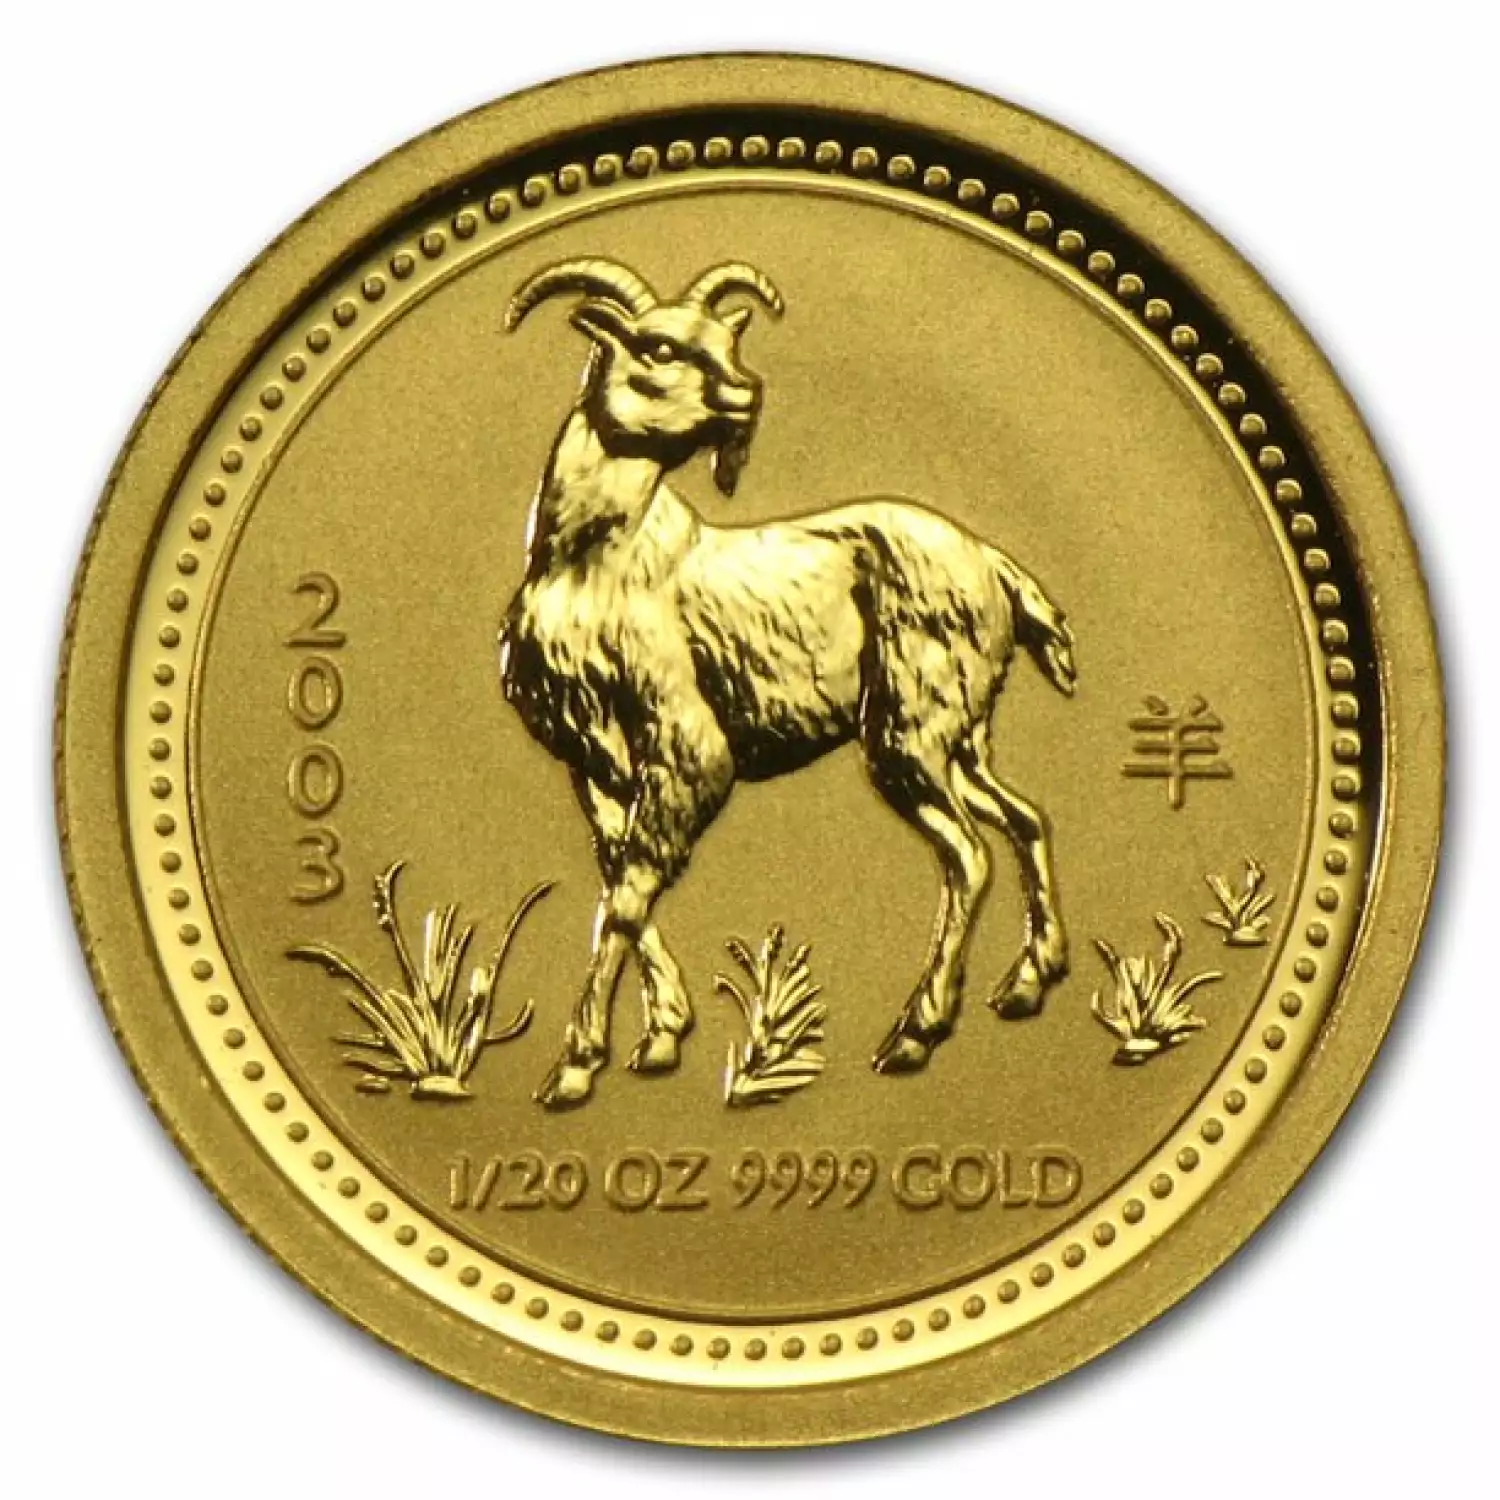 2003 1/20oz Australian Perth Mint Gold Lunar: Year of the Goat (2)